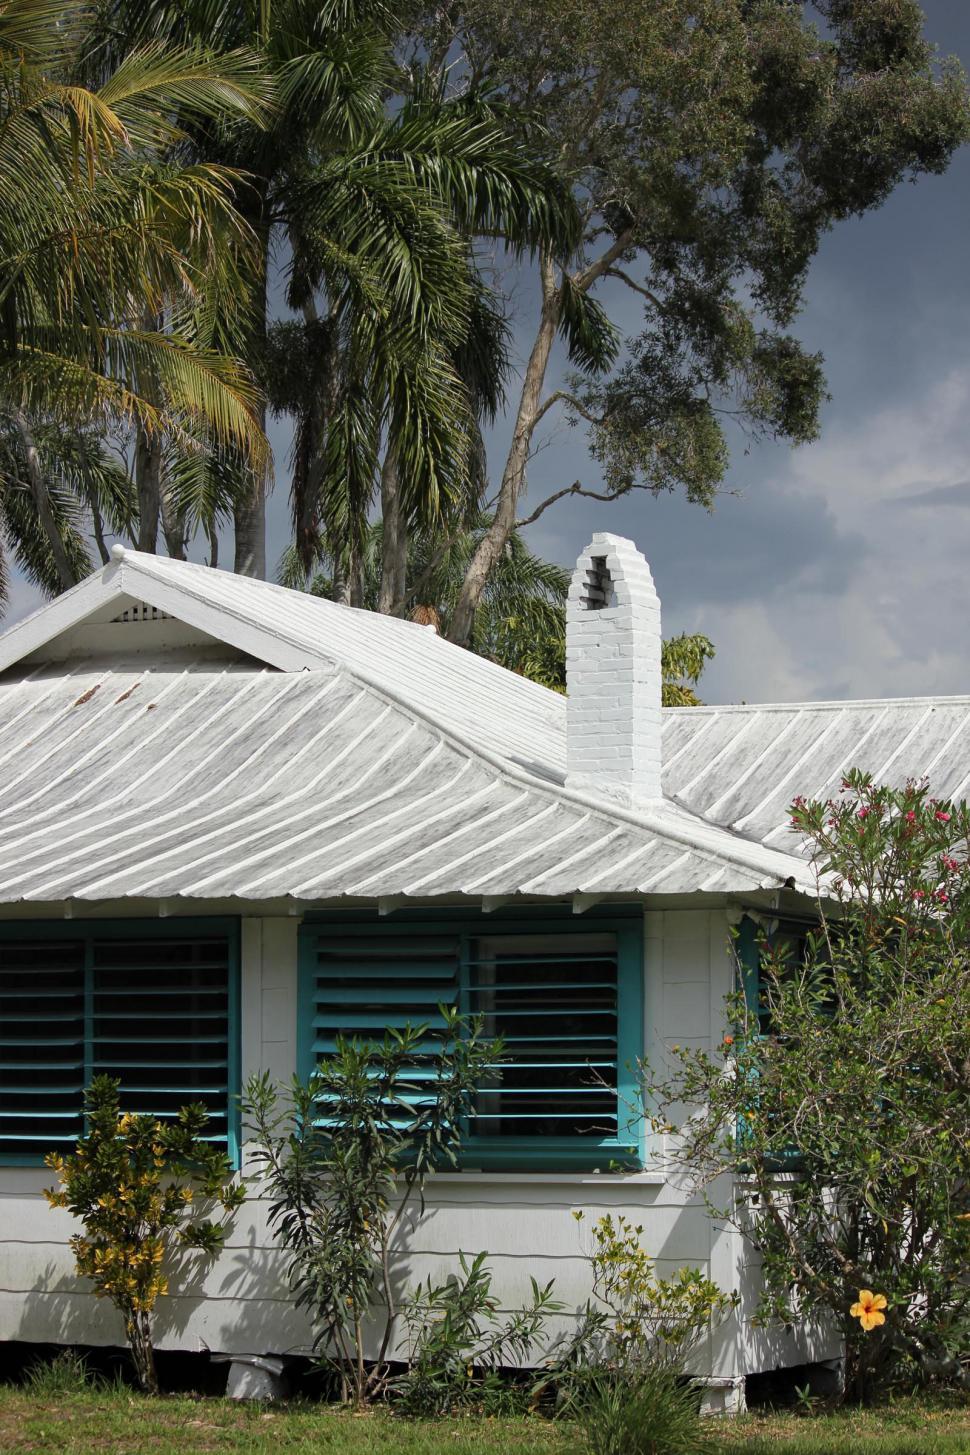 Free Image of Florida KeysKeys House 